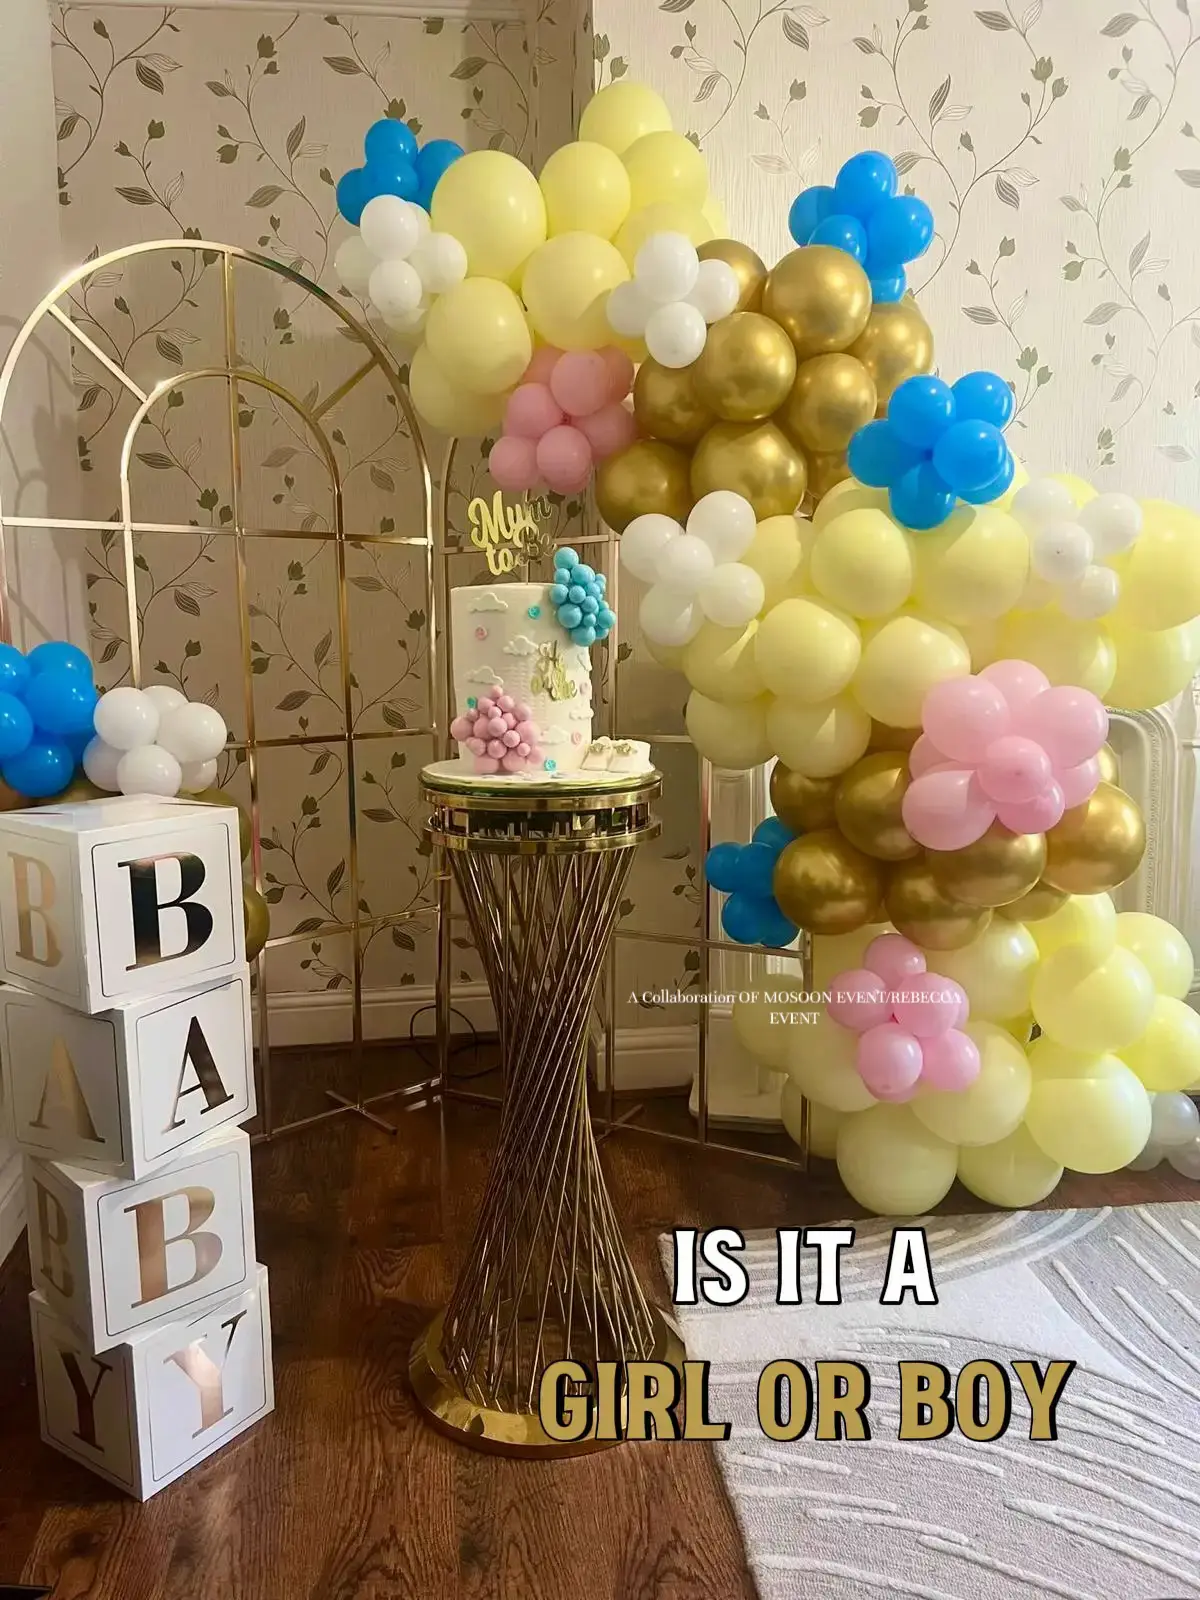 Unique gender reveal ideas with balloons - Lemon8 Search